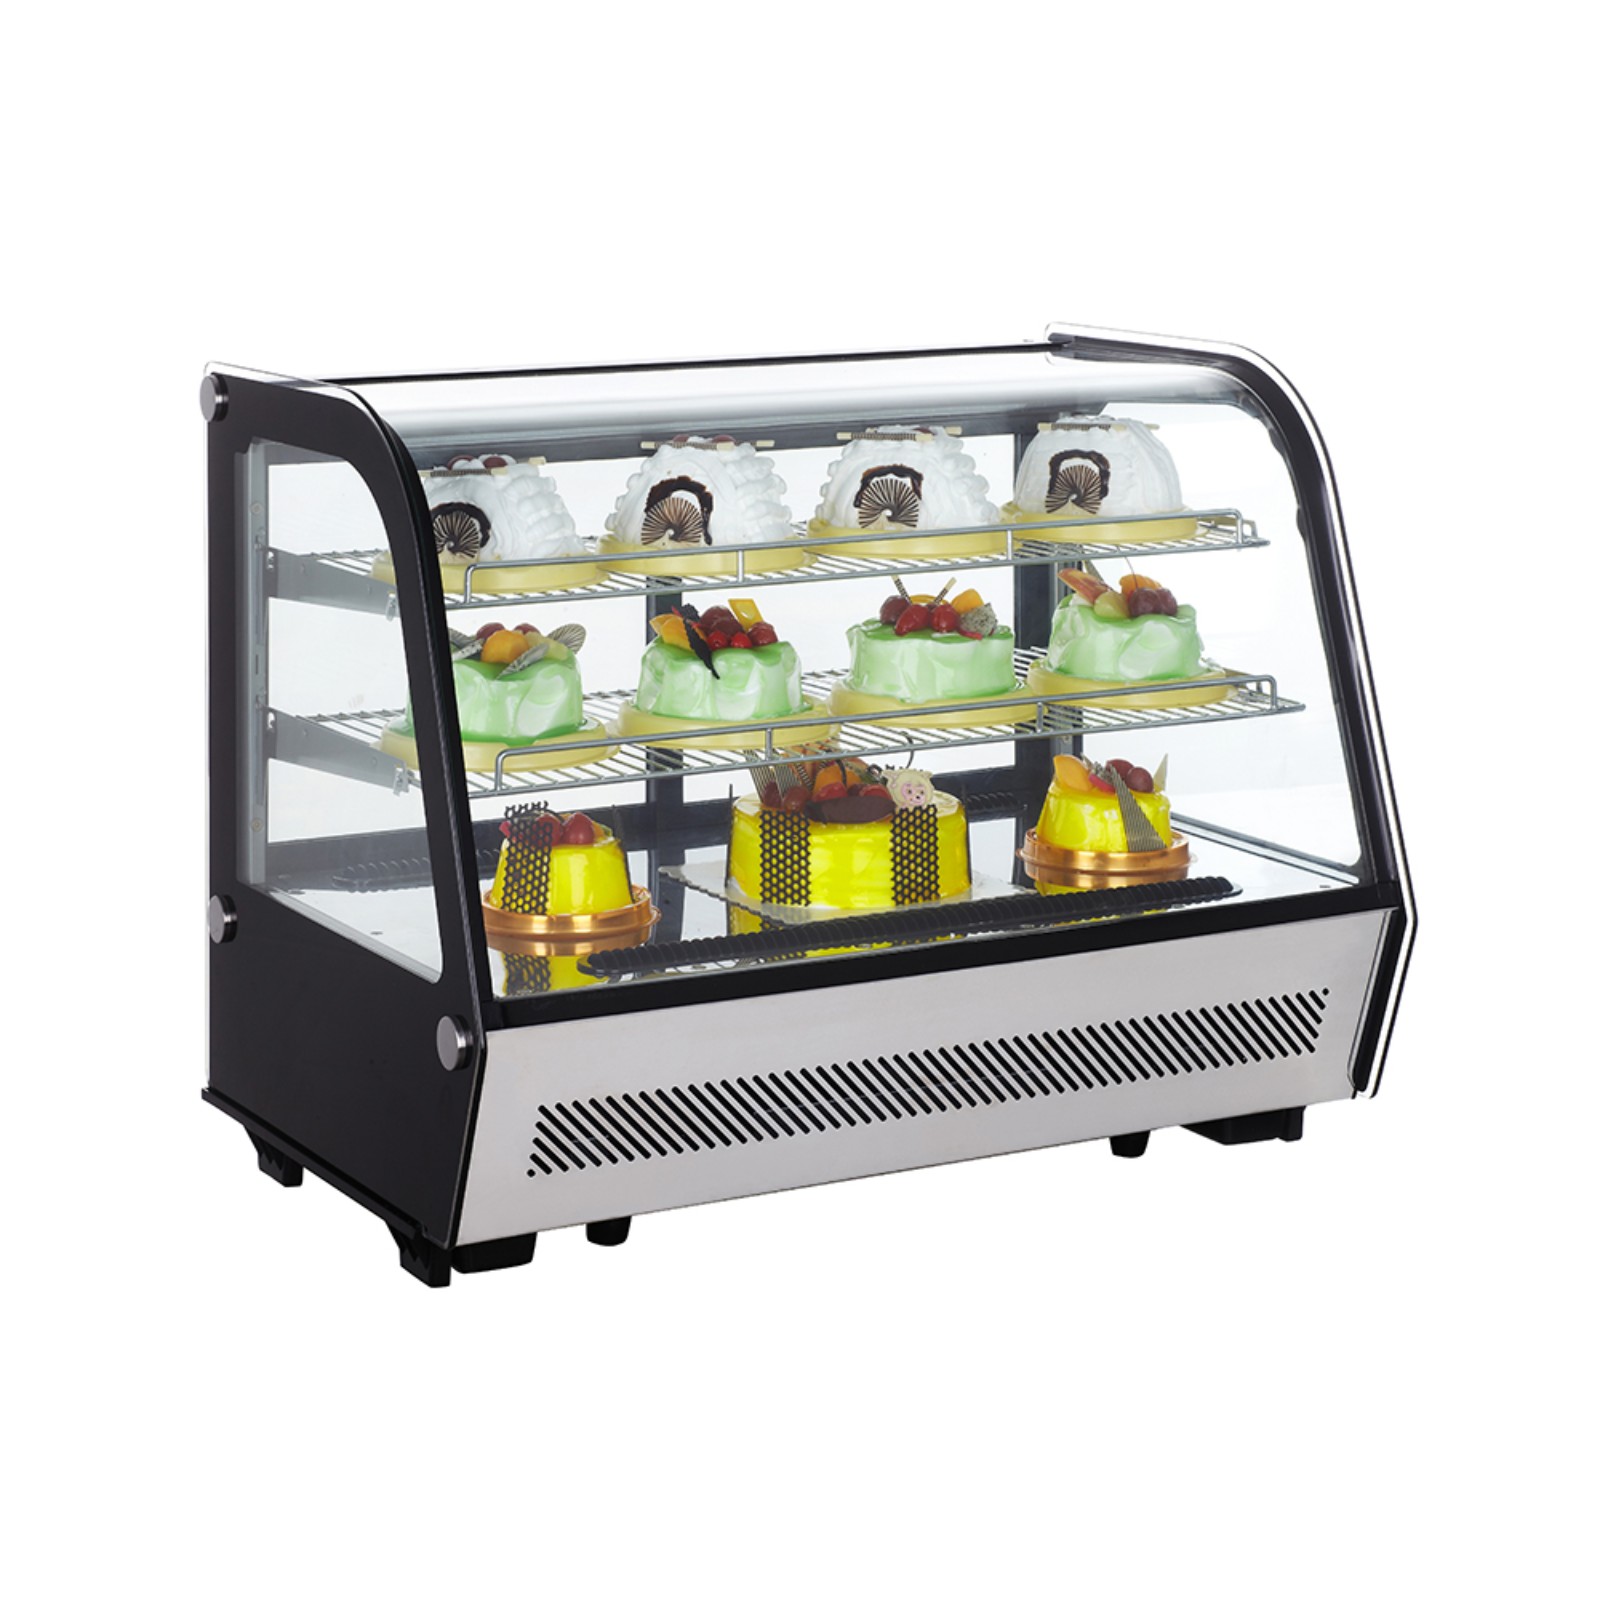 ROVSUN Commercial Countertop Display Refrigerator Pastry Display Case